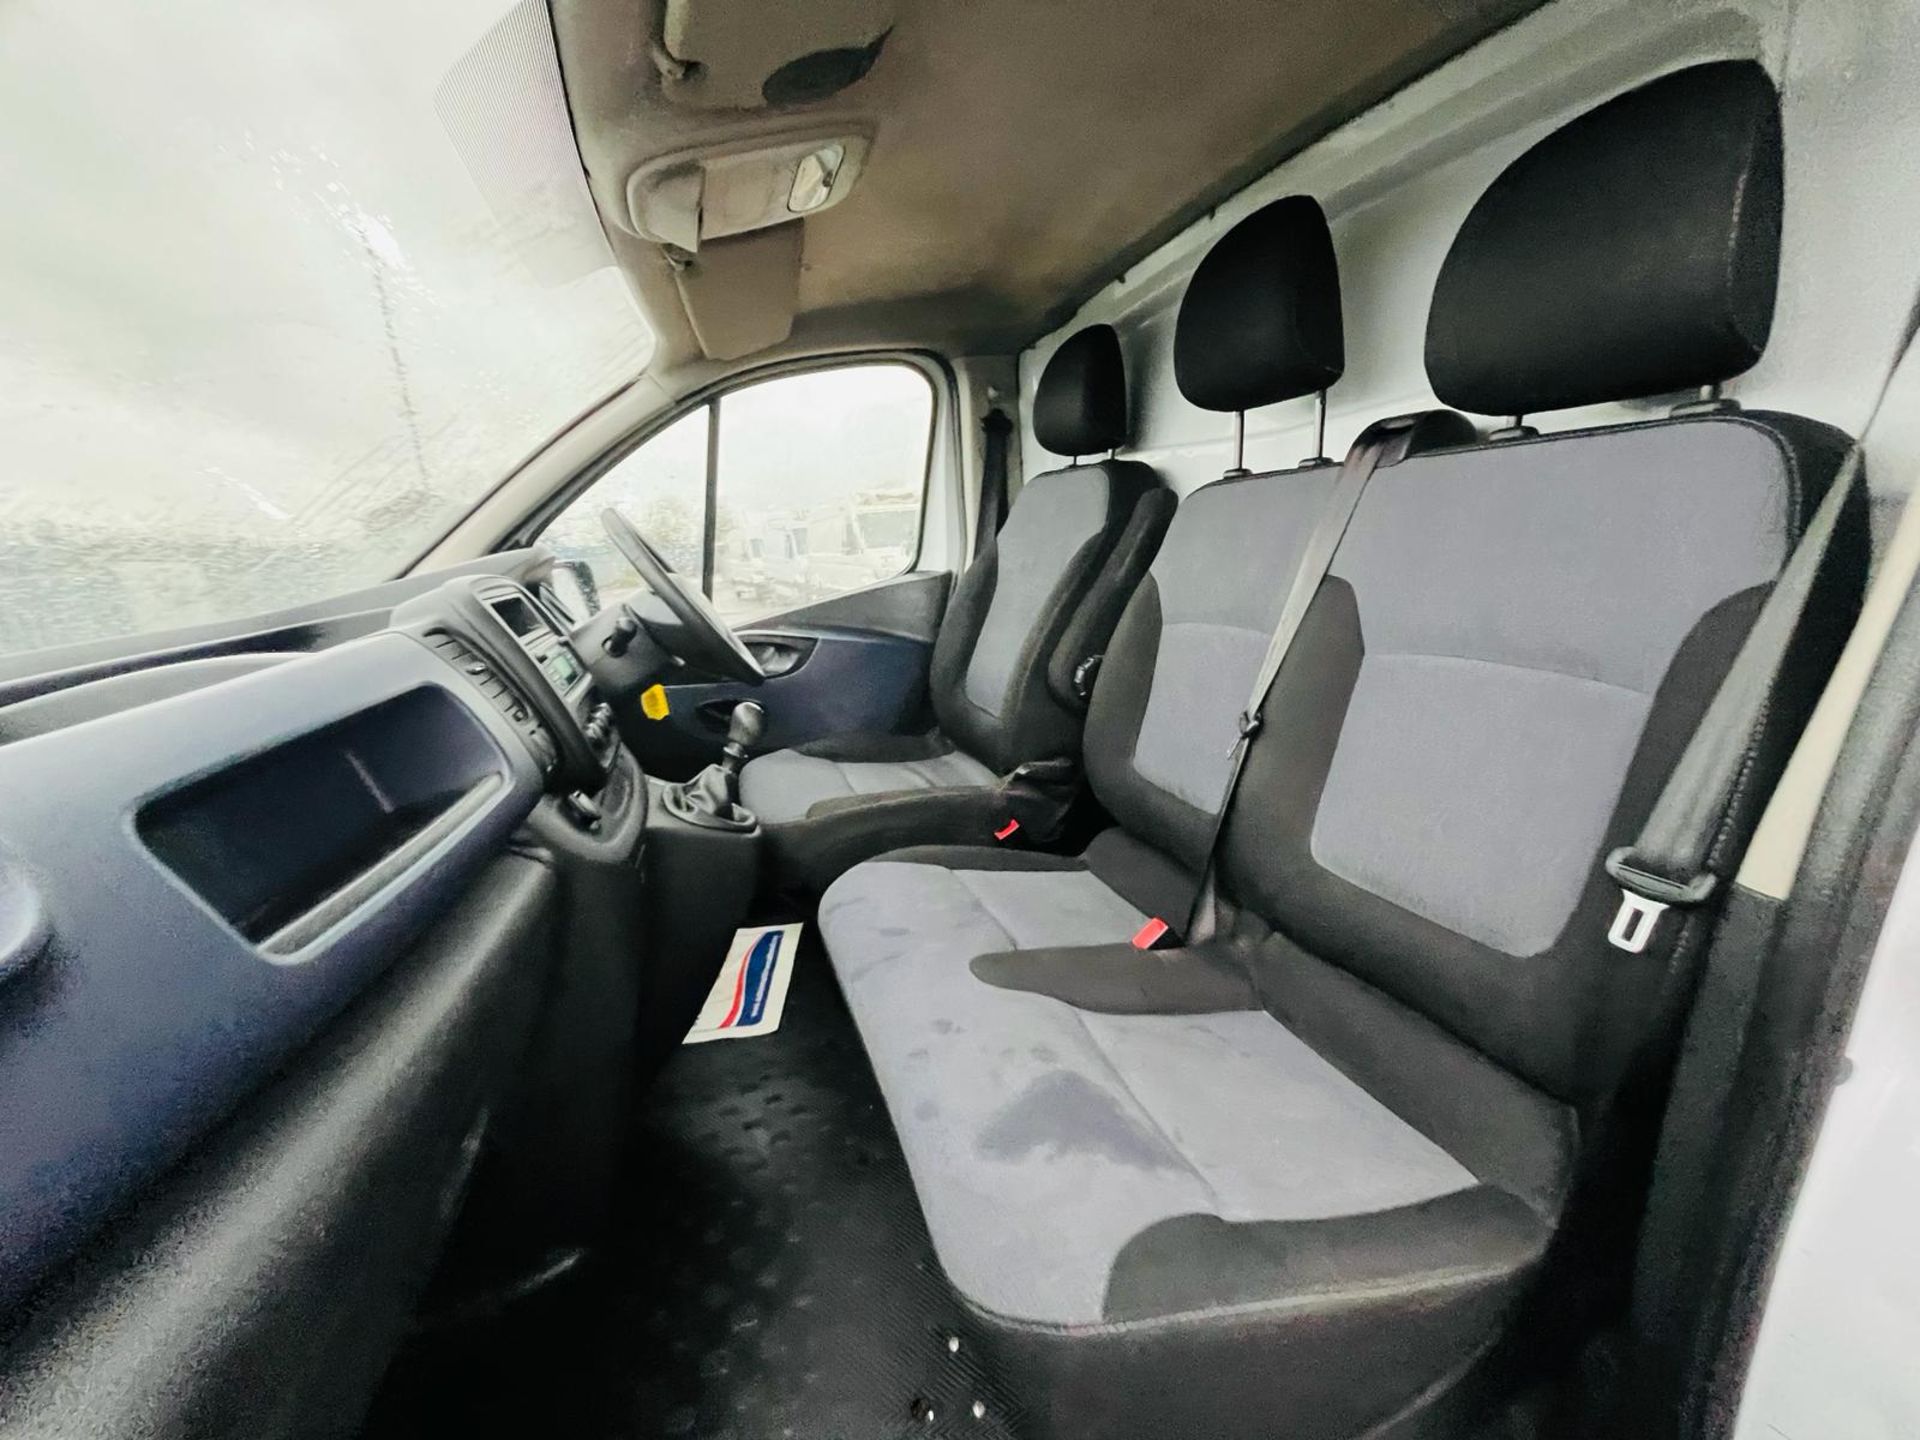 ** ON SALE ** Vauxhall Vivaro 1.6 CDTI LWB L1 115 2015 '15 Reg' Panel Van - No Vat - Long wheel base - Image 23 of 27